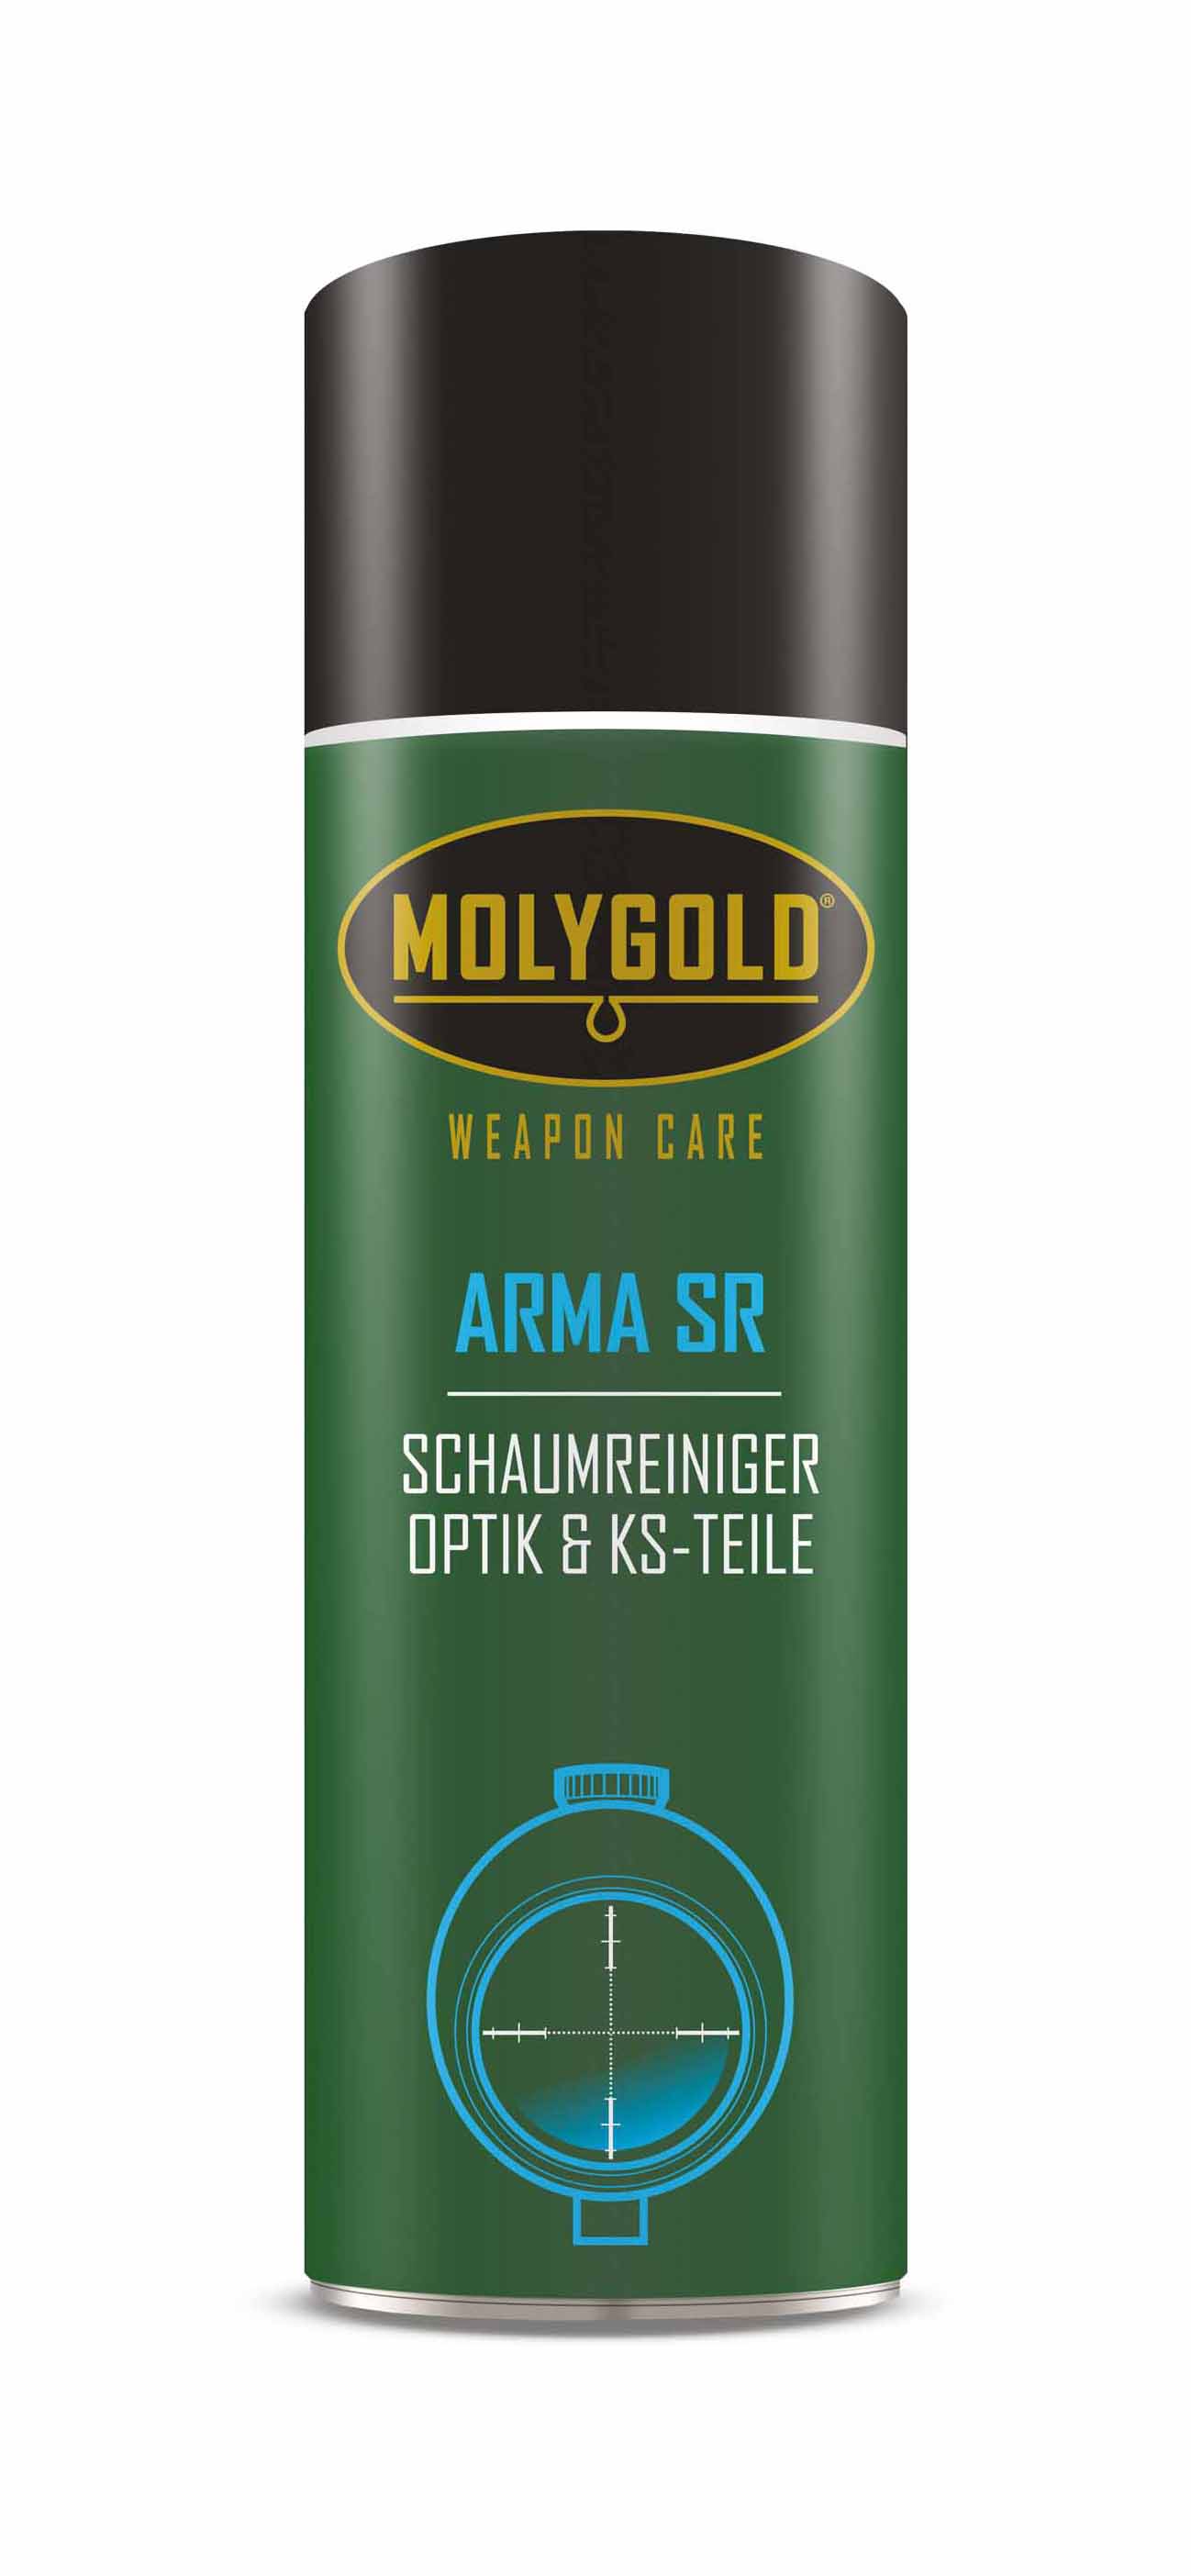 ARMA SR Optik Schaumreiniger 100ml/UN1950